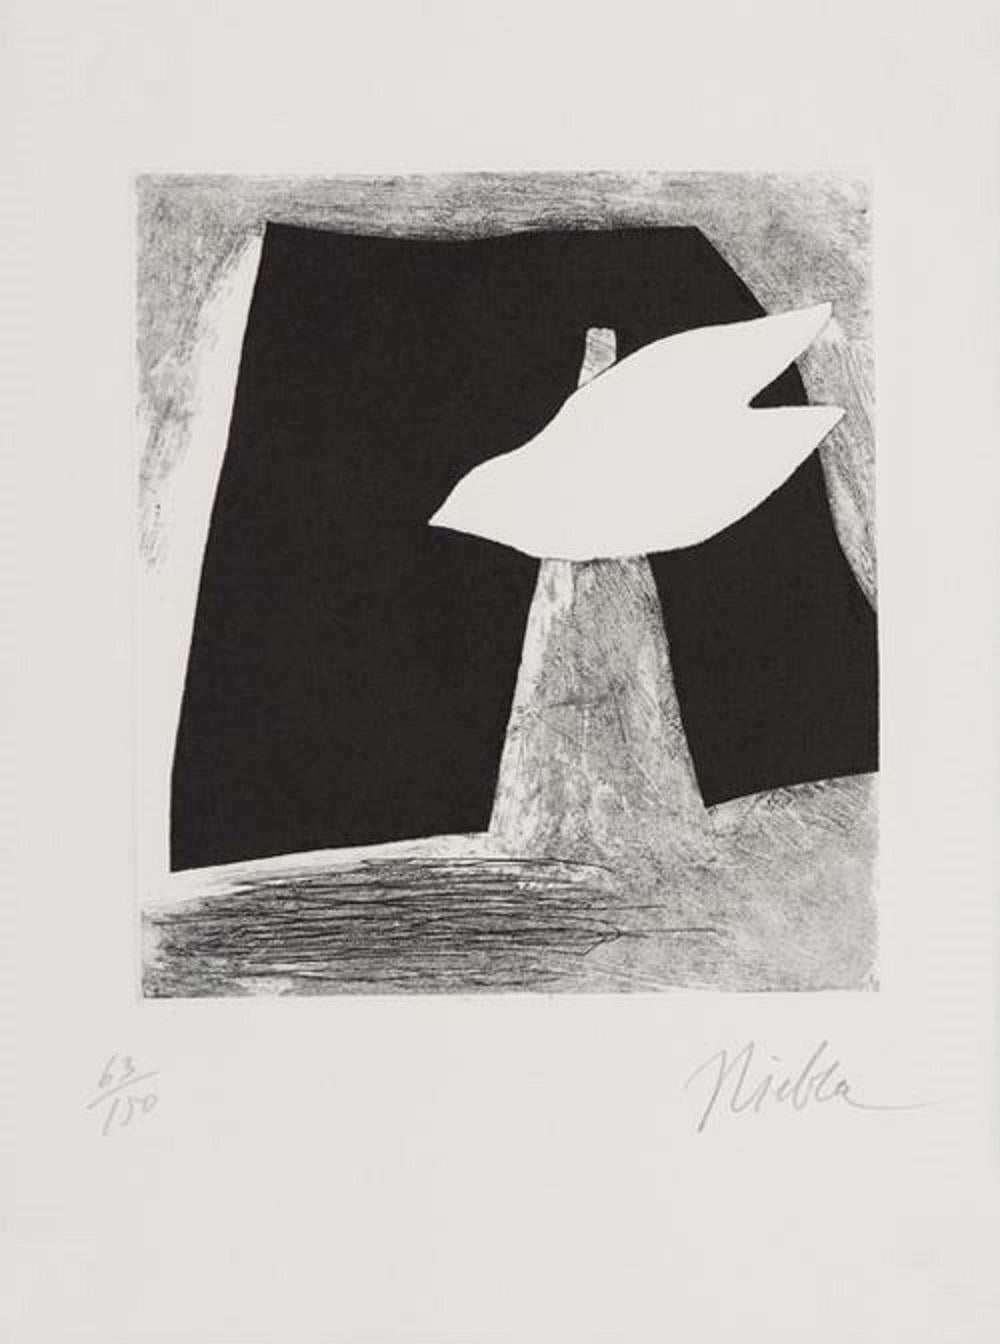 José Niebla Spanish Artist Original Hand Signed silkscreen 1996 n3